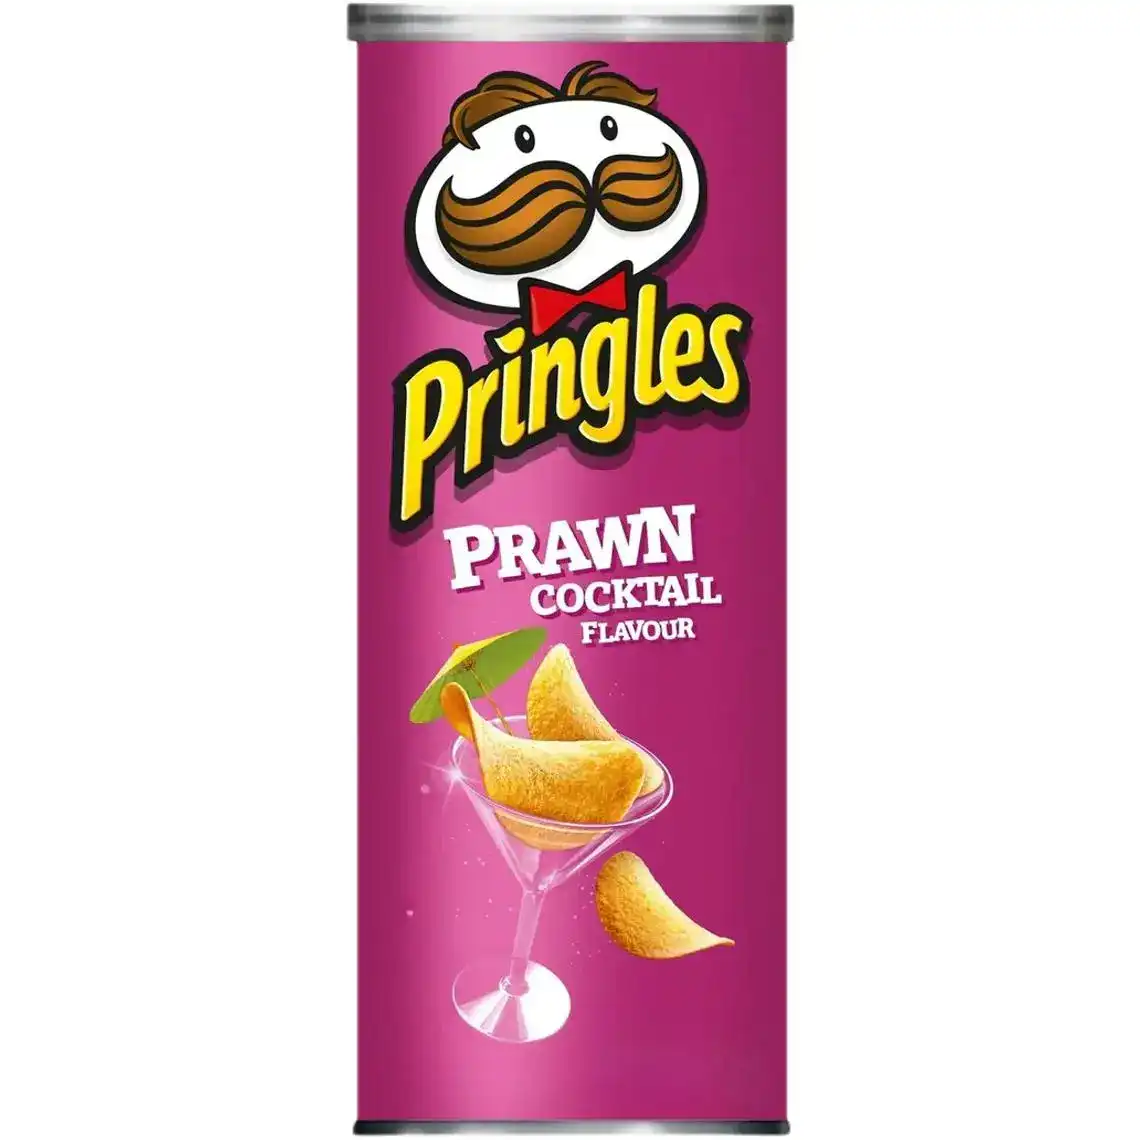 Чіпси Pringles зі смаком креветок 165 г